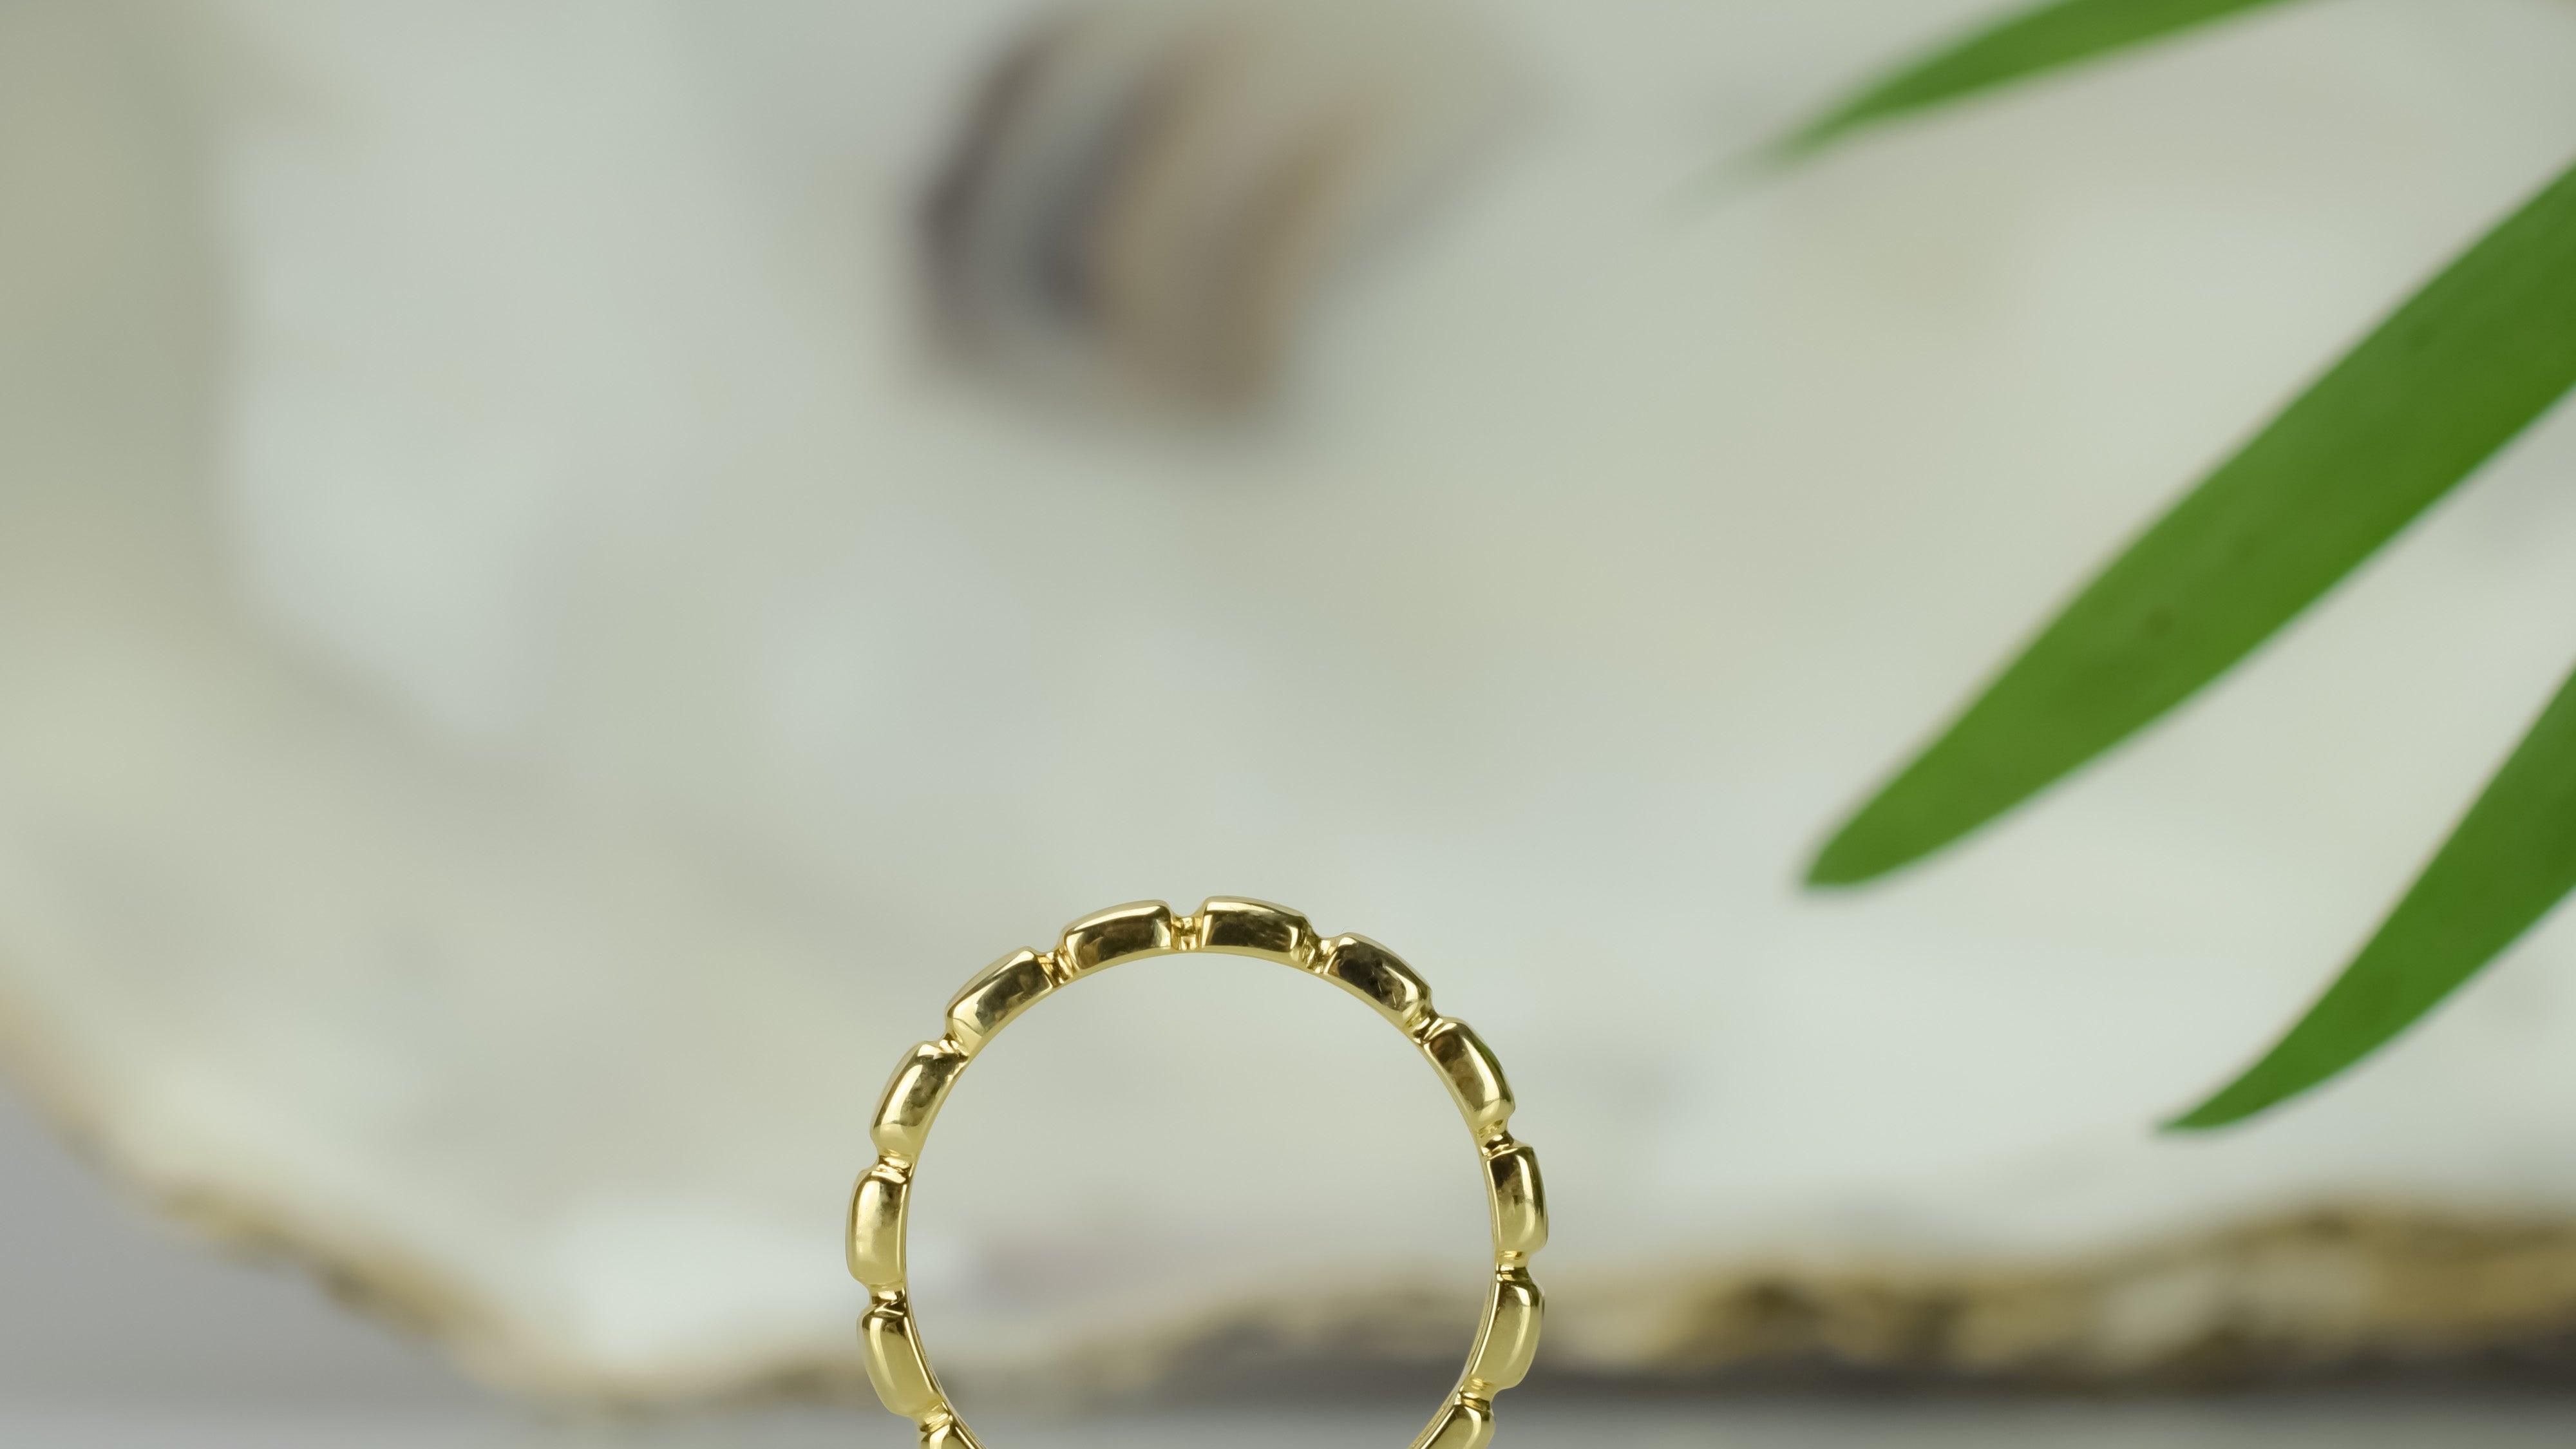 Balkjes ring, 14k gouden balkjes ring, rinbg 14k, aanschuifring, stapelring goud, unieke stapelring